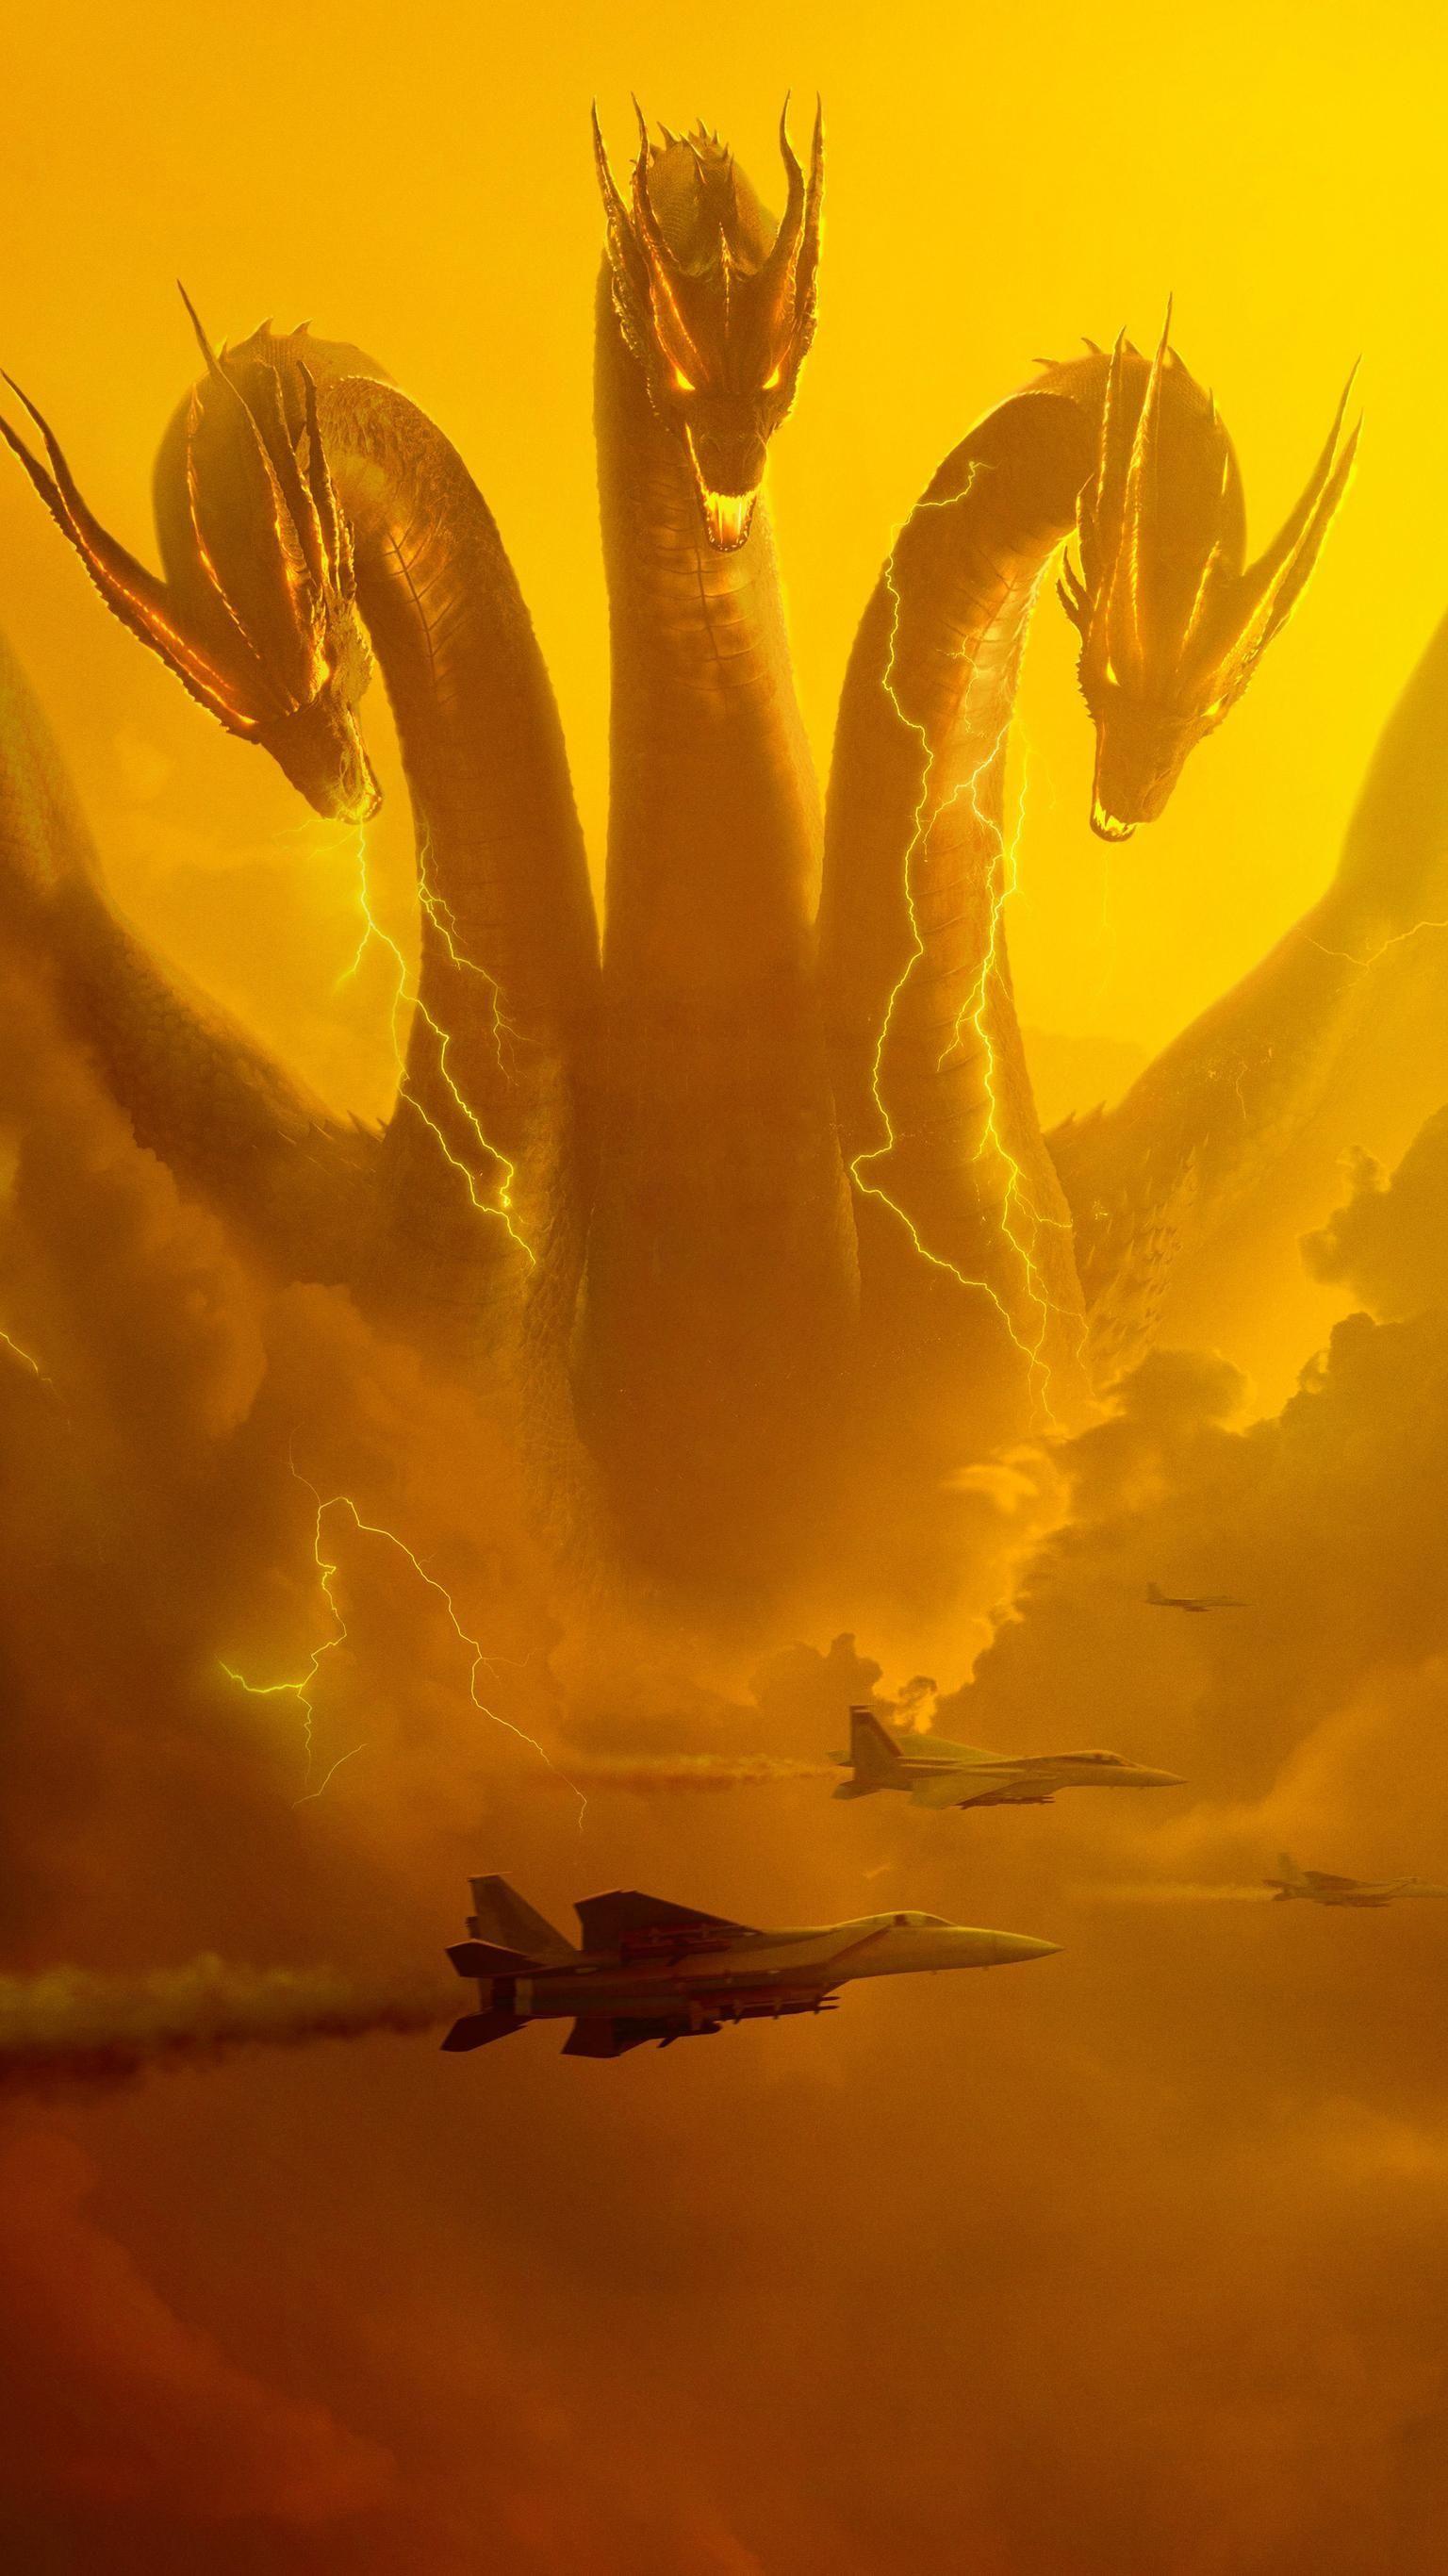 3D iPhone Wallpaper on Twitter Godzilla King of the Monsters iPhone  Wallpaper httpstcoA4SYjLL9fd httpstcoTWmAURJBEC  X